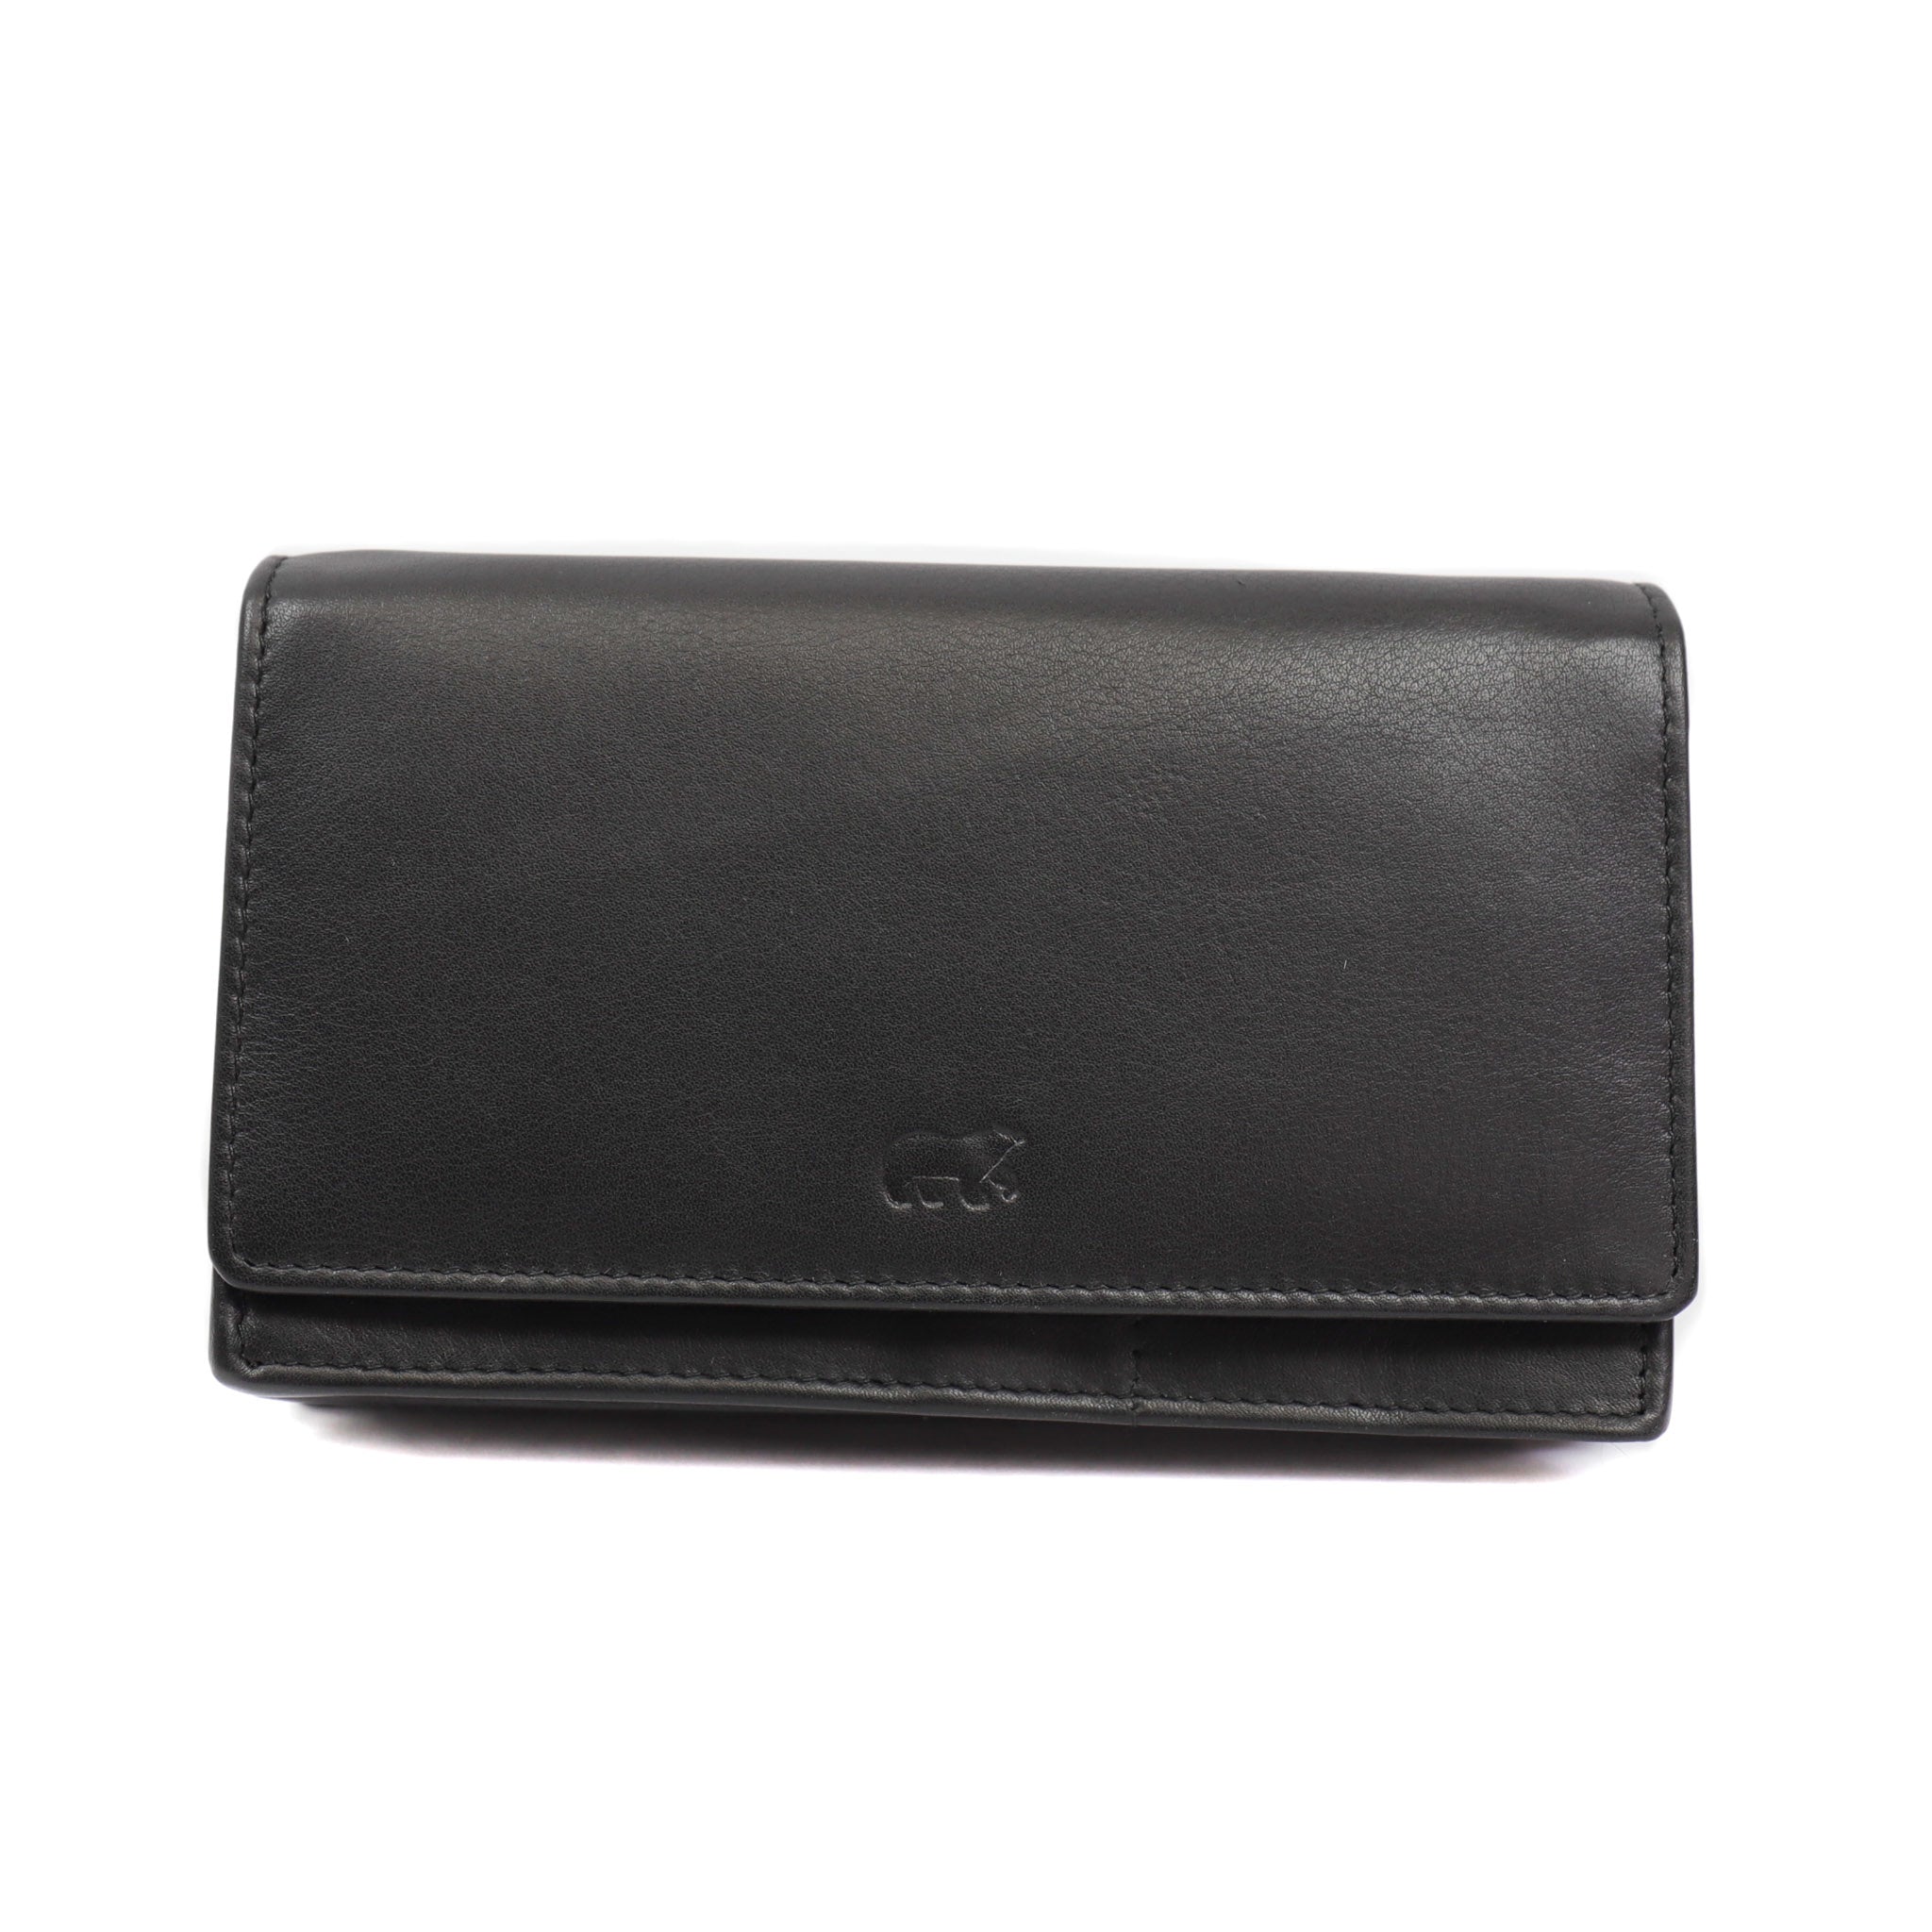 Basic wrap wallet 'Emma' black